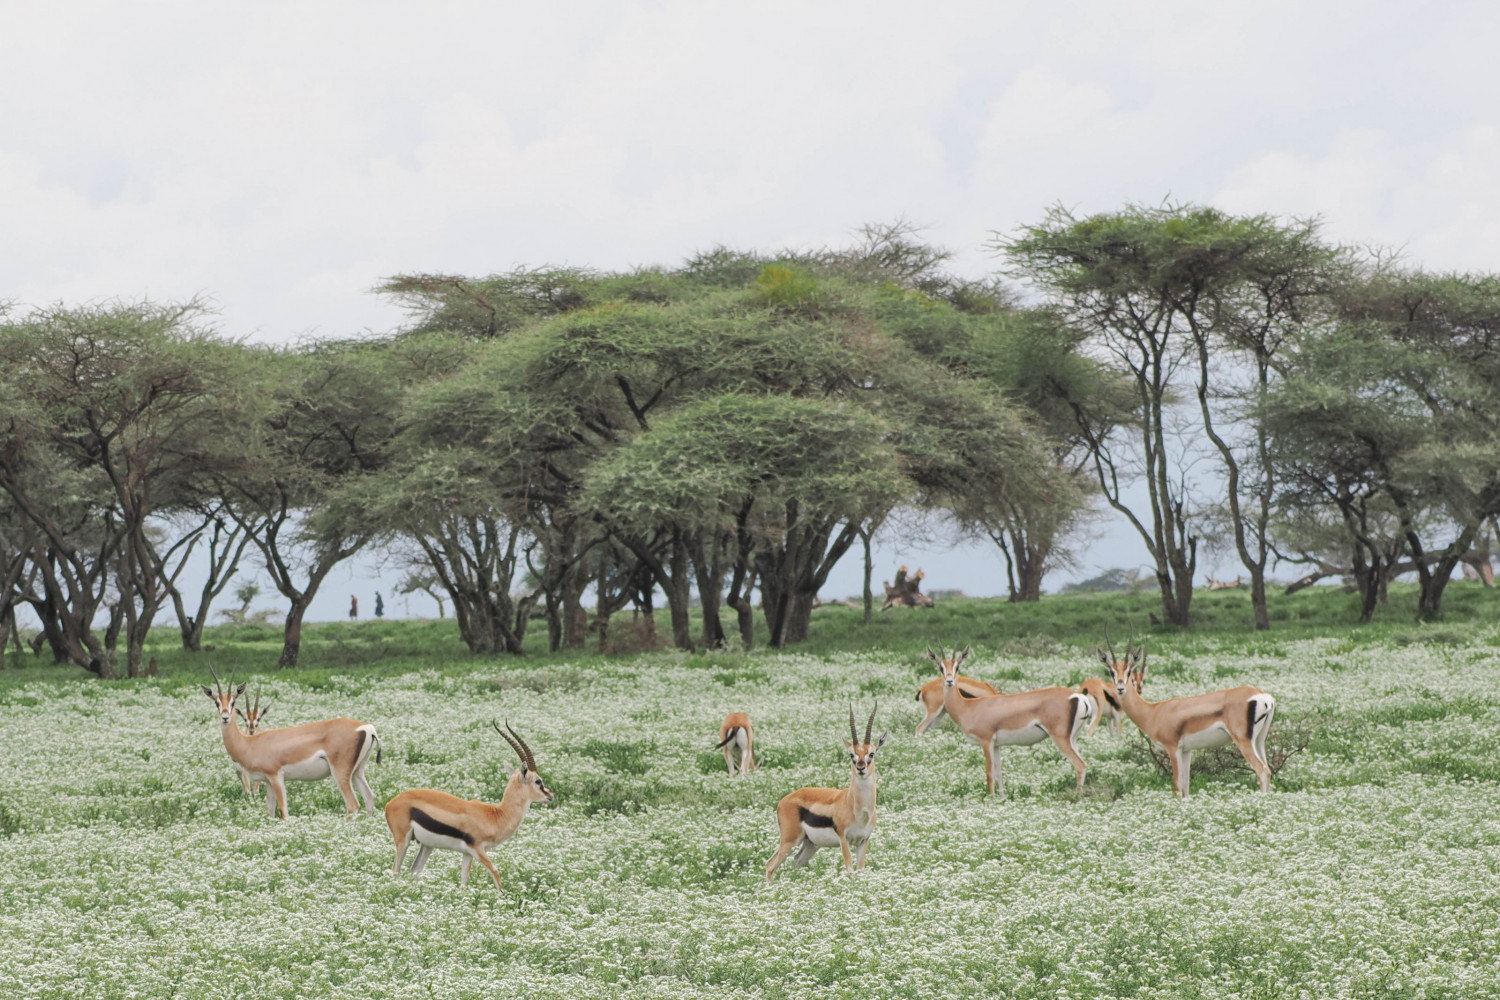 A group of gazelles.